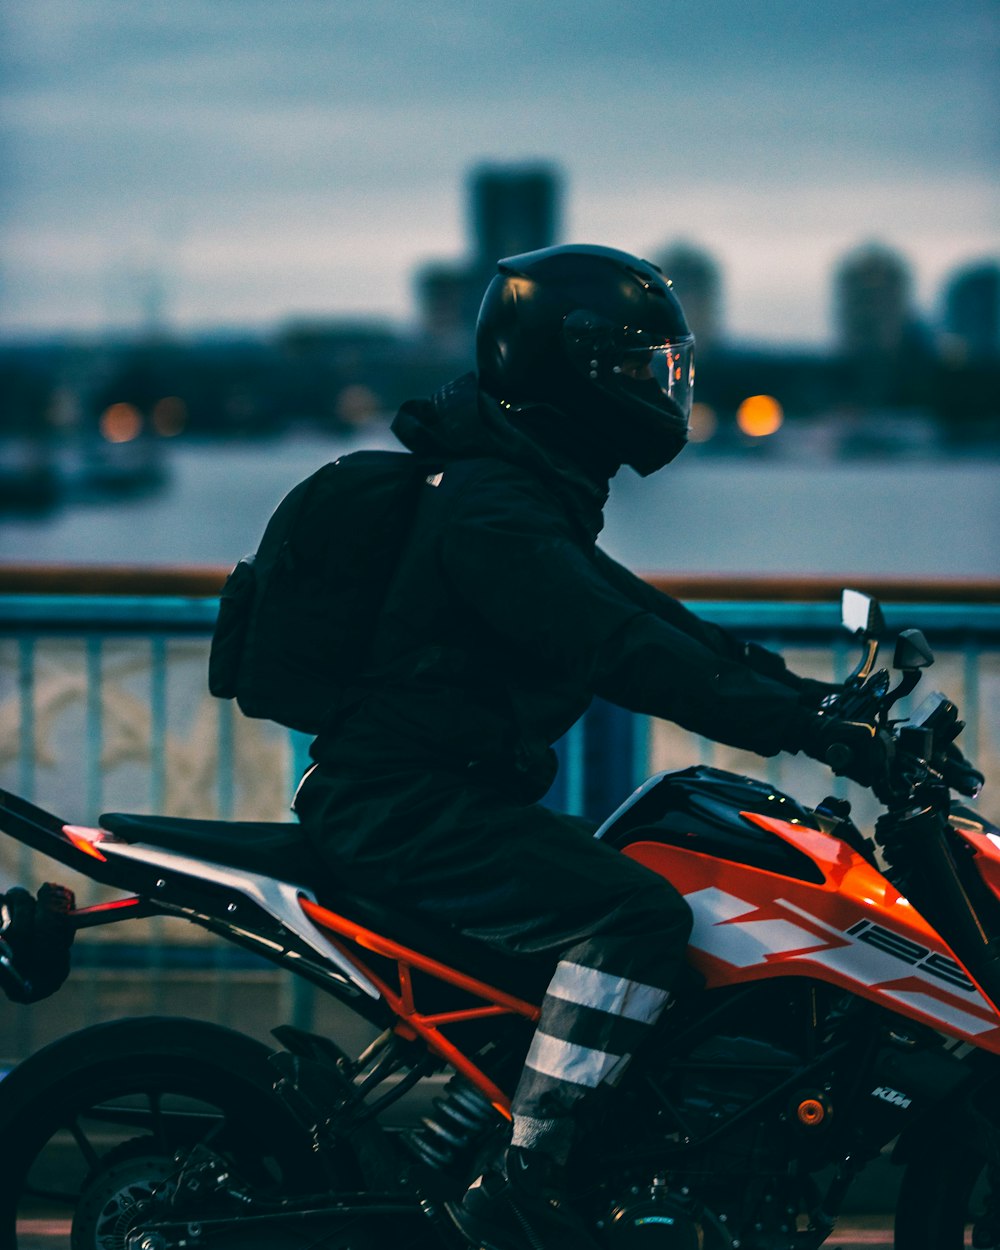 Hombre en chaqueta negra montando motocicleta naranja y negra